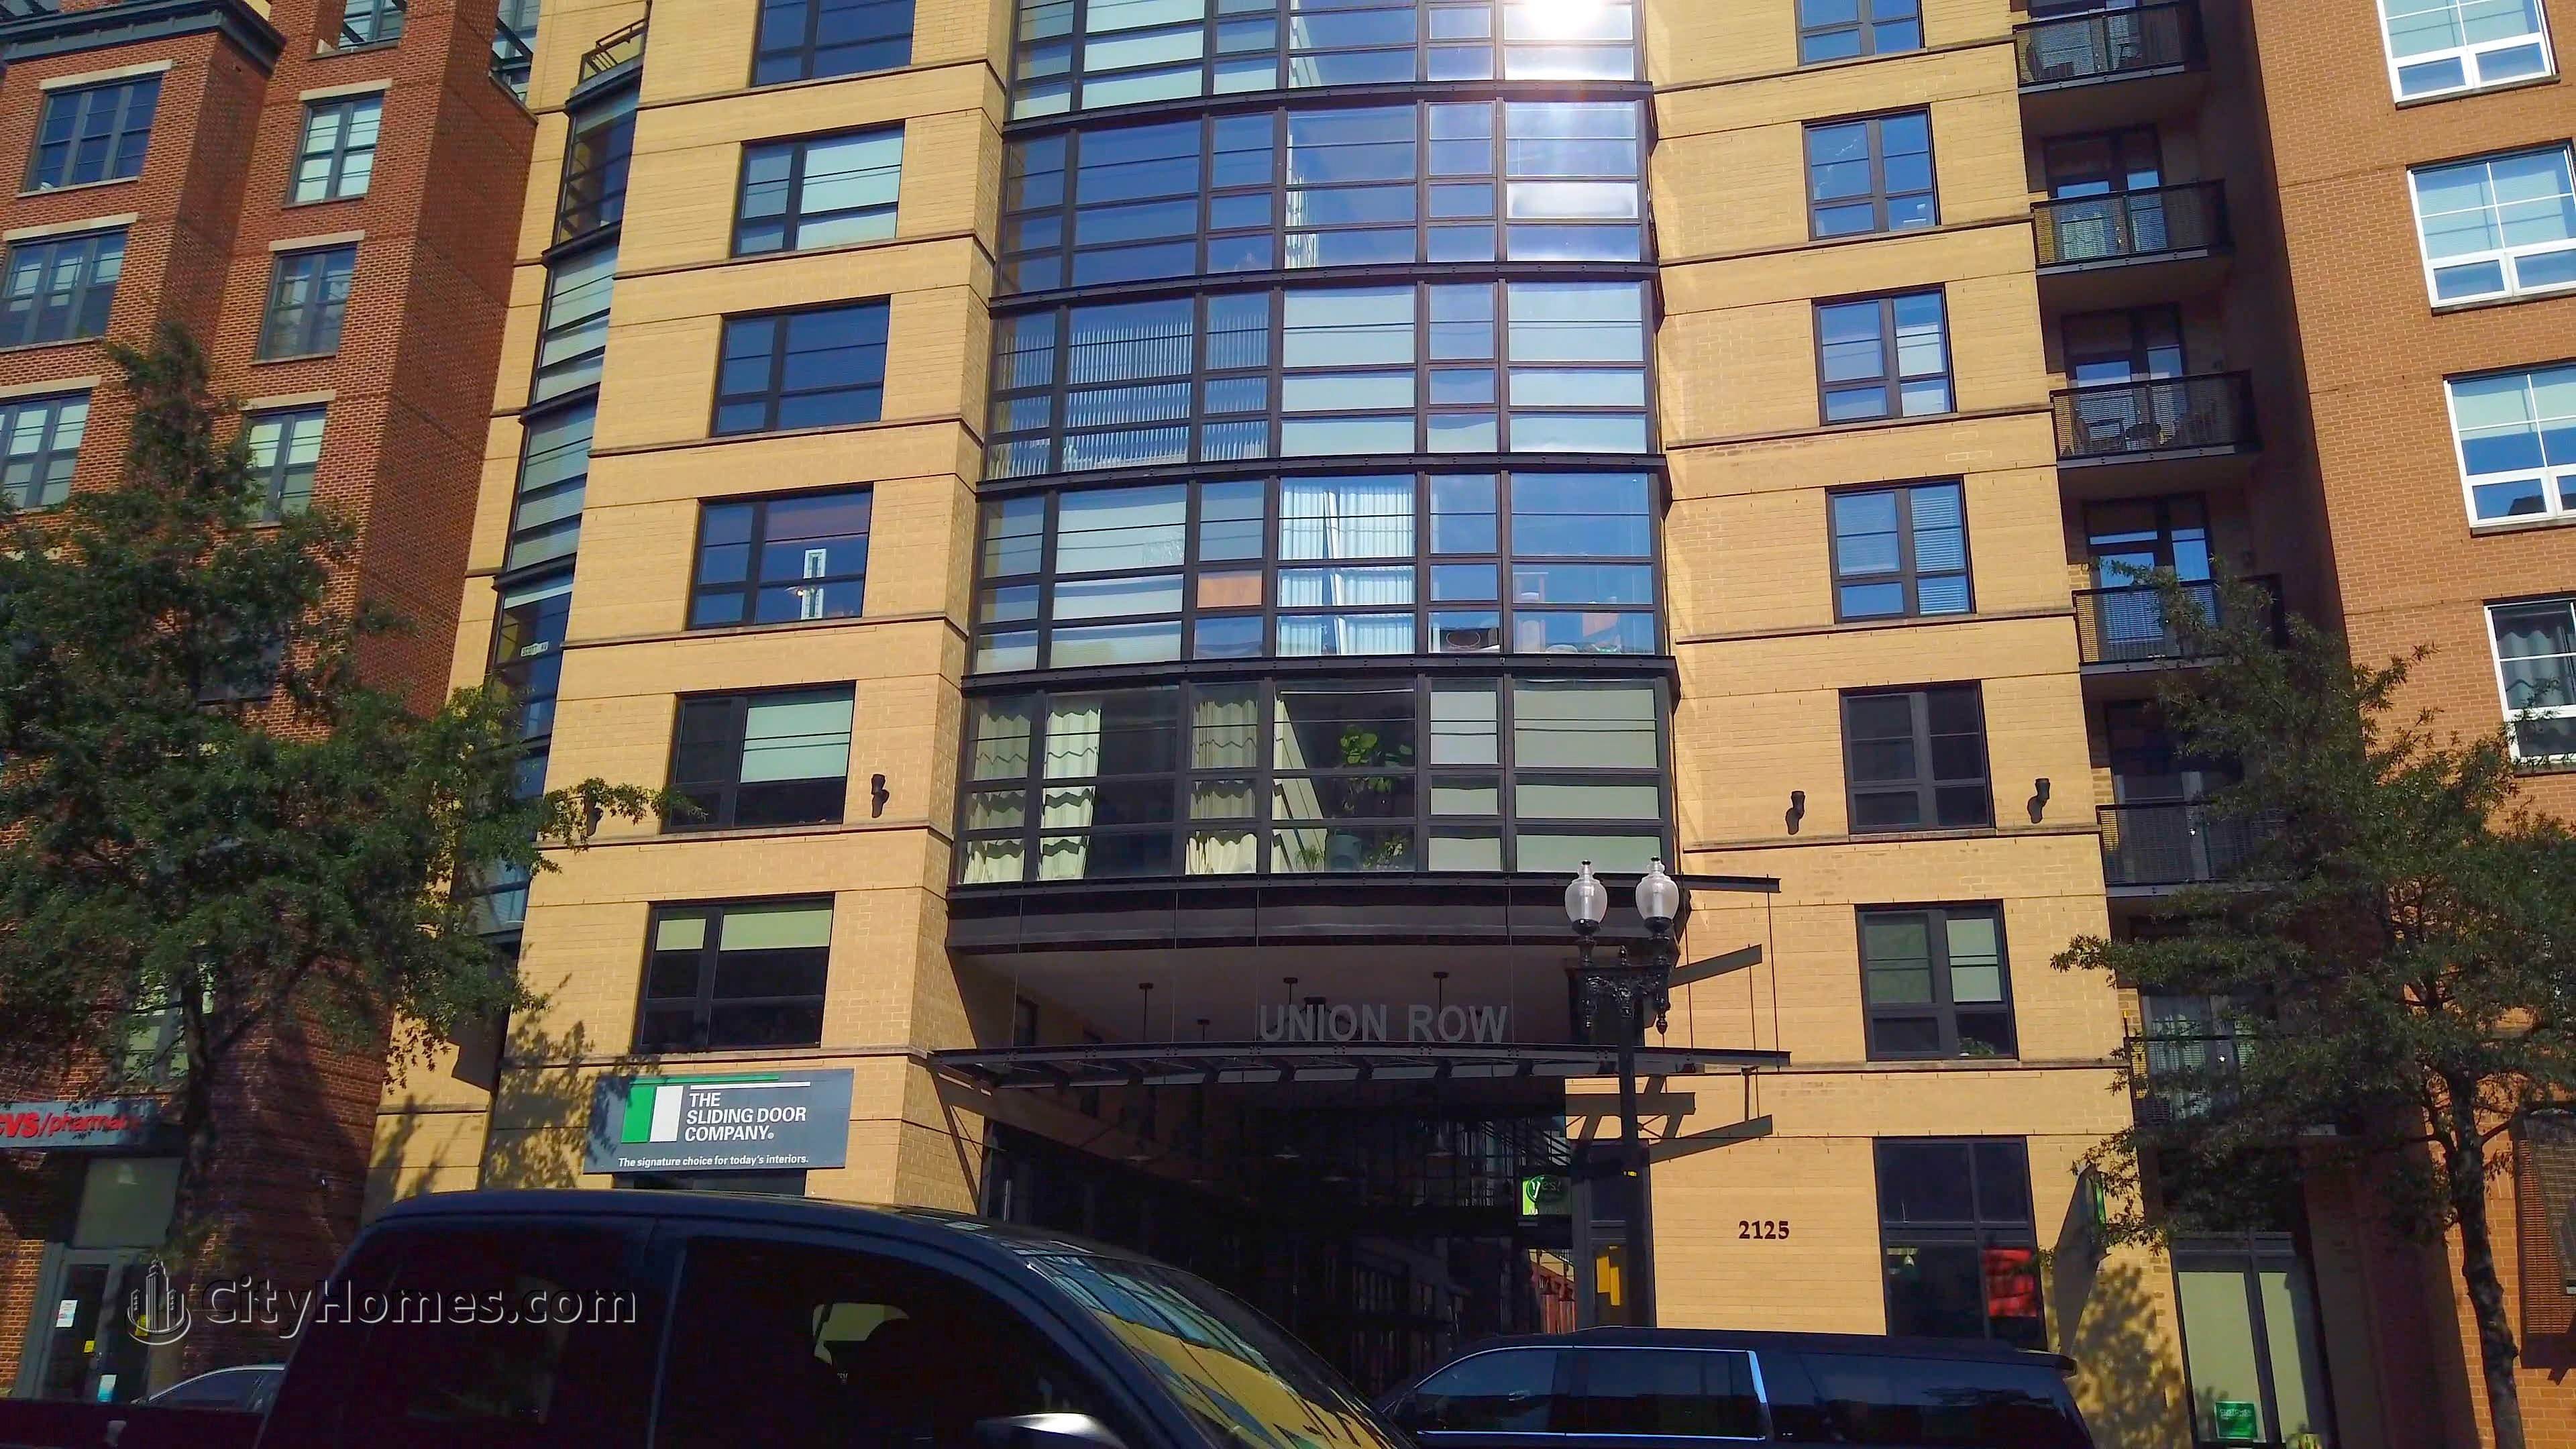 3. Flats at Union Row building at 2125 14th St NW, U Street Corridor, Washington, DC 20009